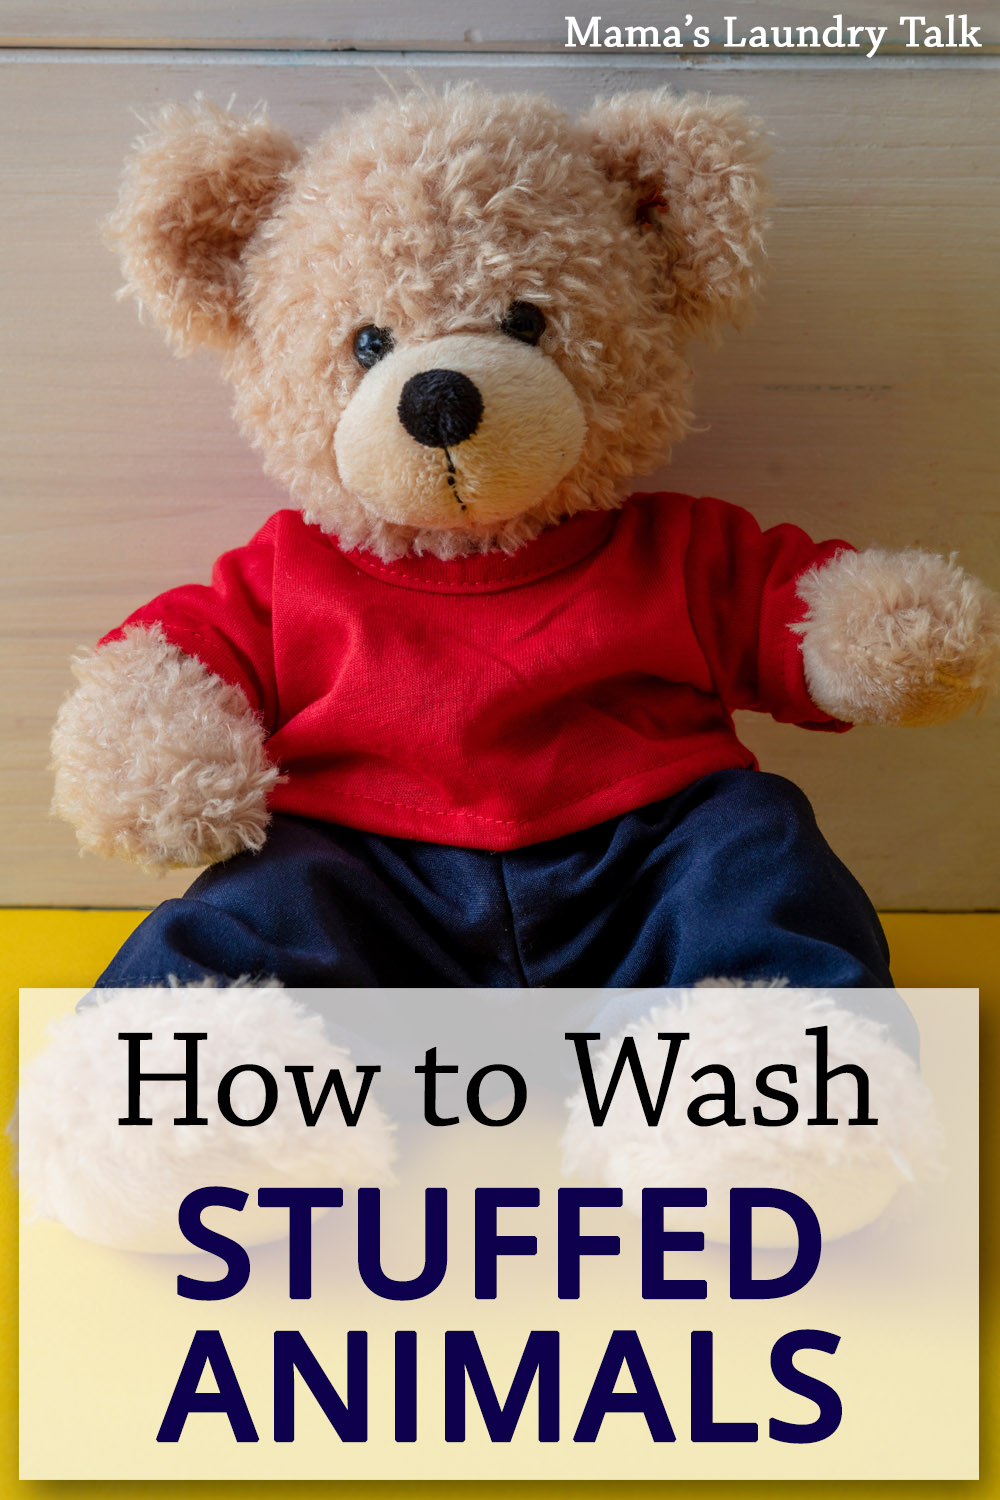 How to Wash Stuffed Animals - Mama's Laundry Talk